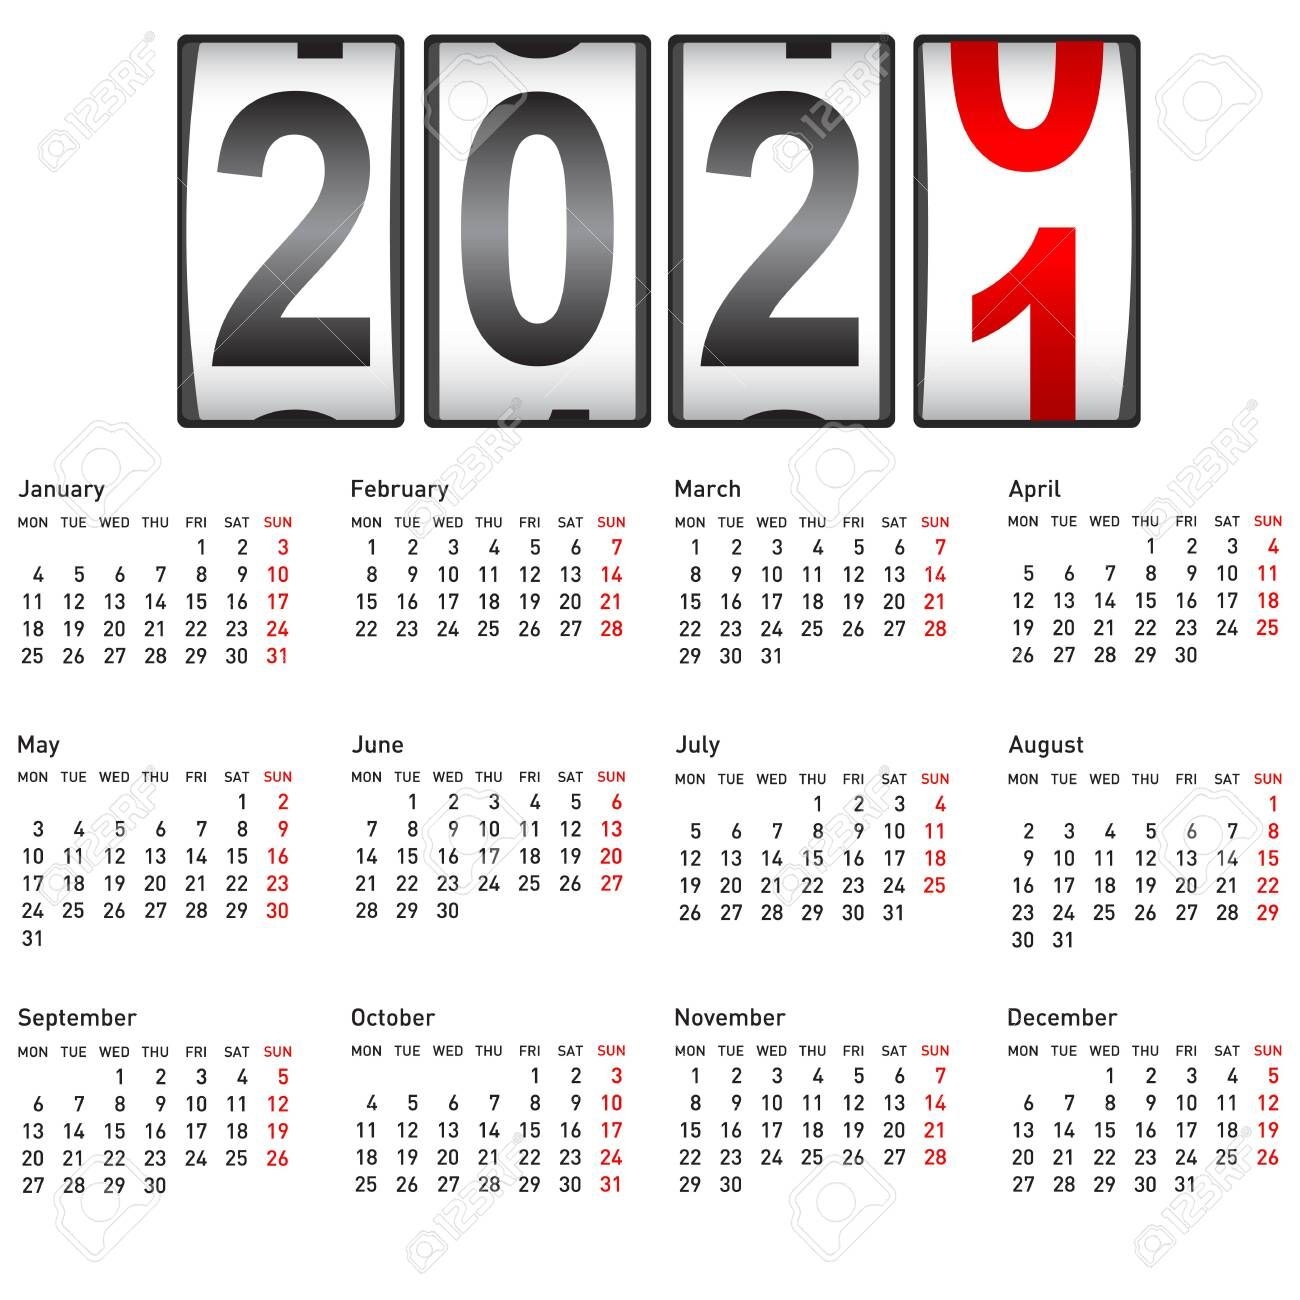 2021 New Year Counter, Change Calendar Illustration.